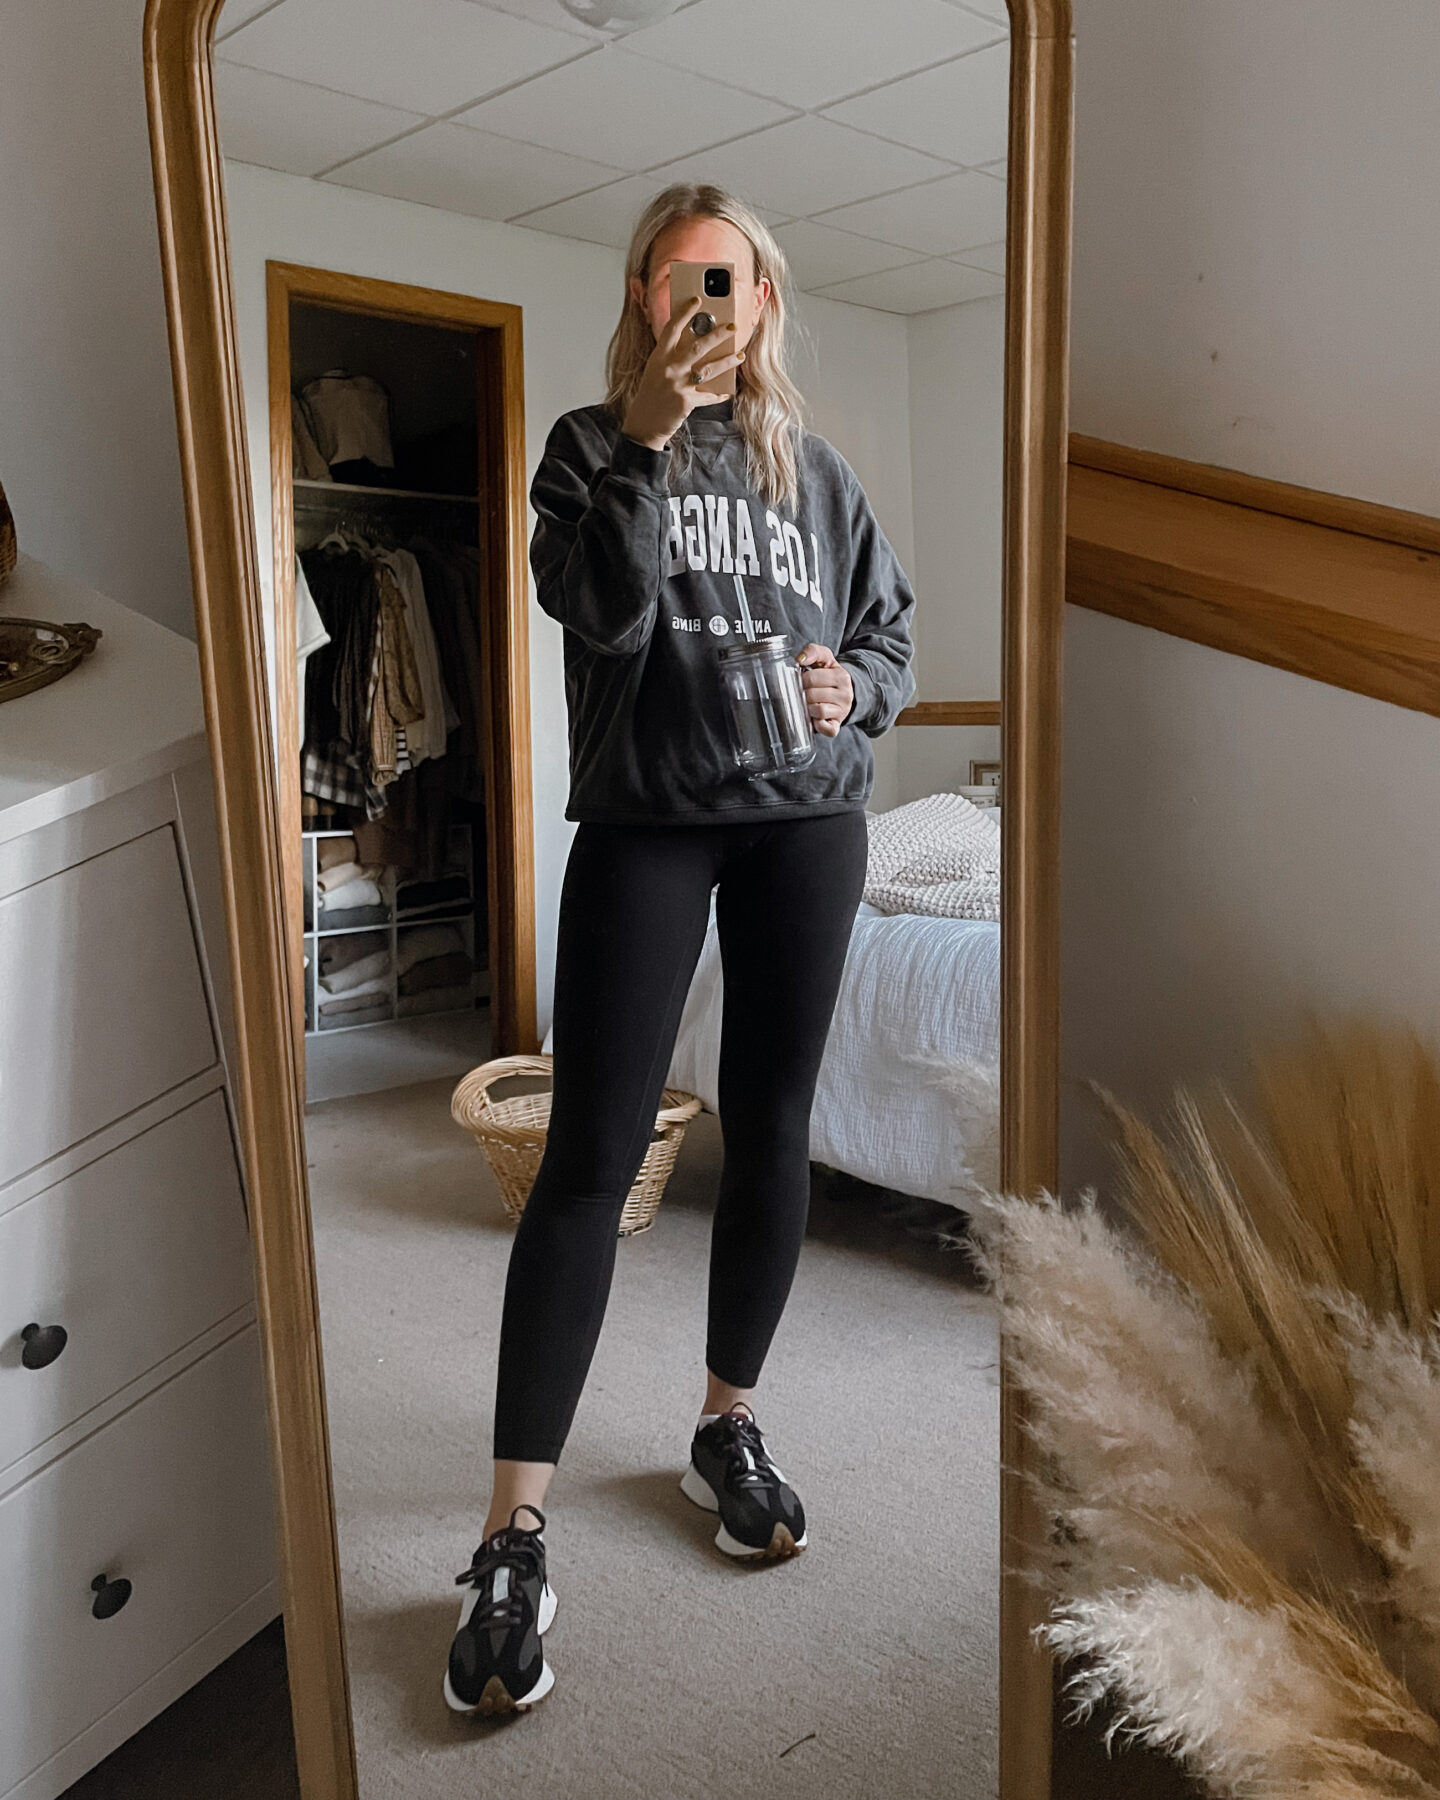 Karin Emily wears an anine bing los angeles sweatshirt, black leggings, and new balance sneakers